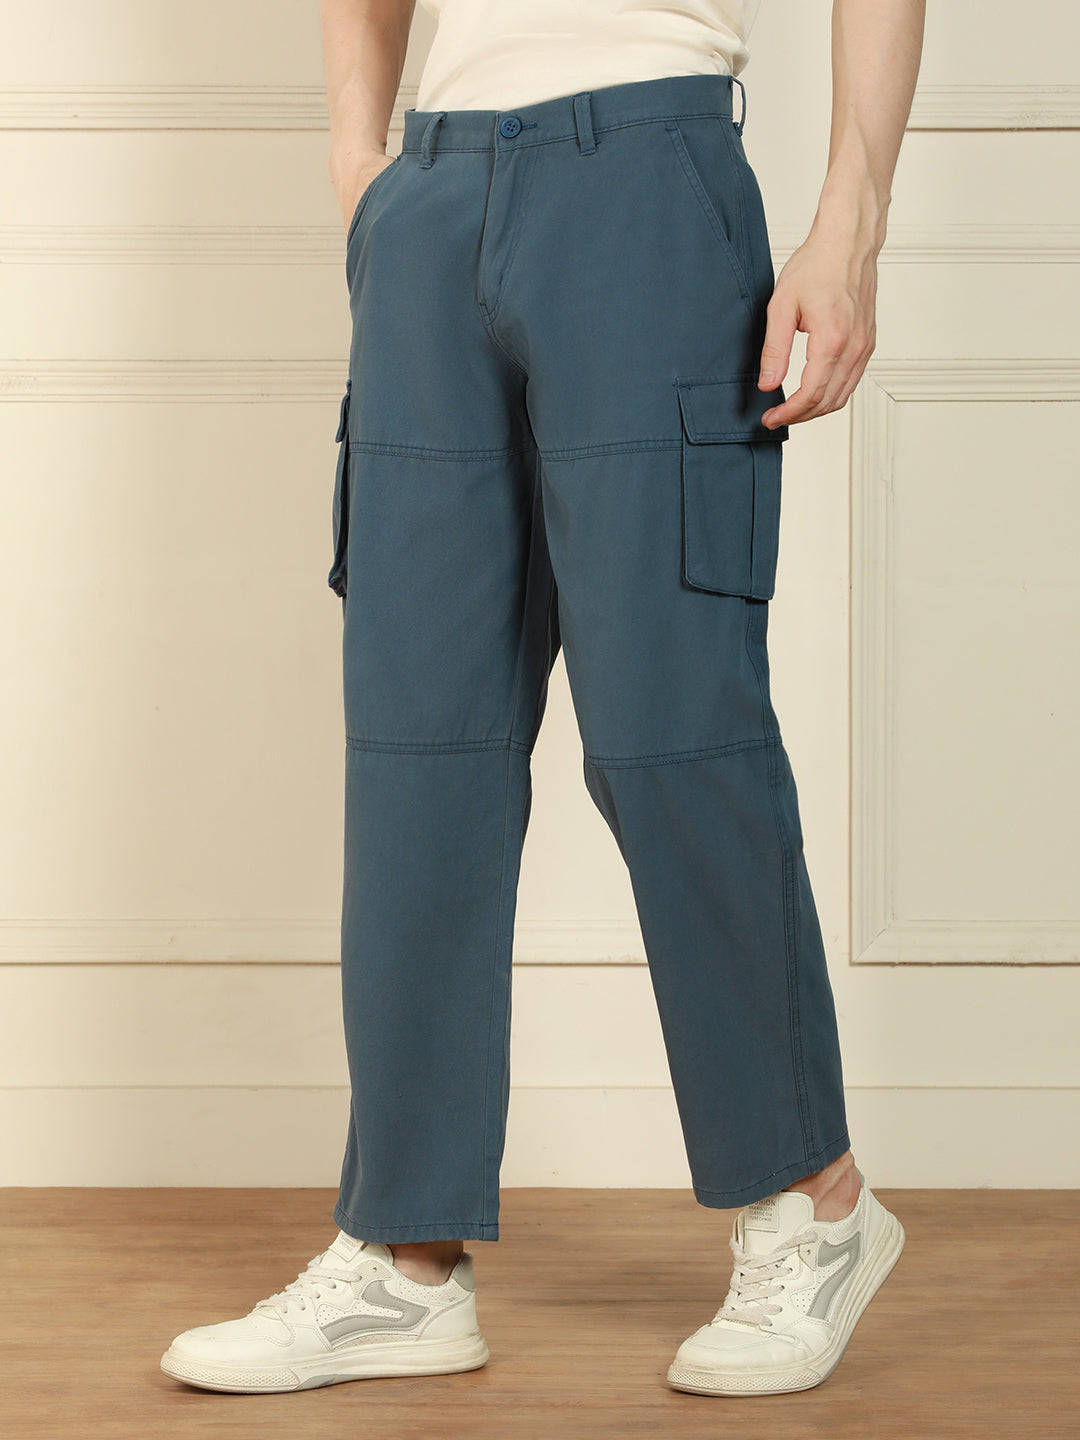 Dennis Lingo Men's Denim blue Relaxed Fit Solid Cotton Lycra Stretchable Trousers